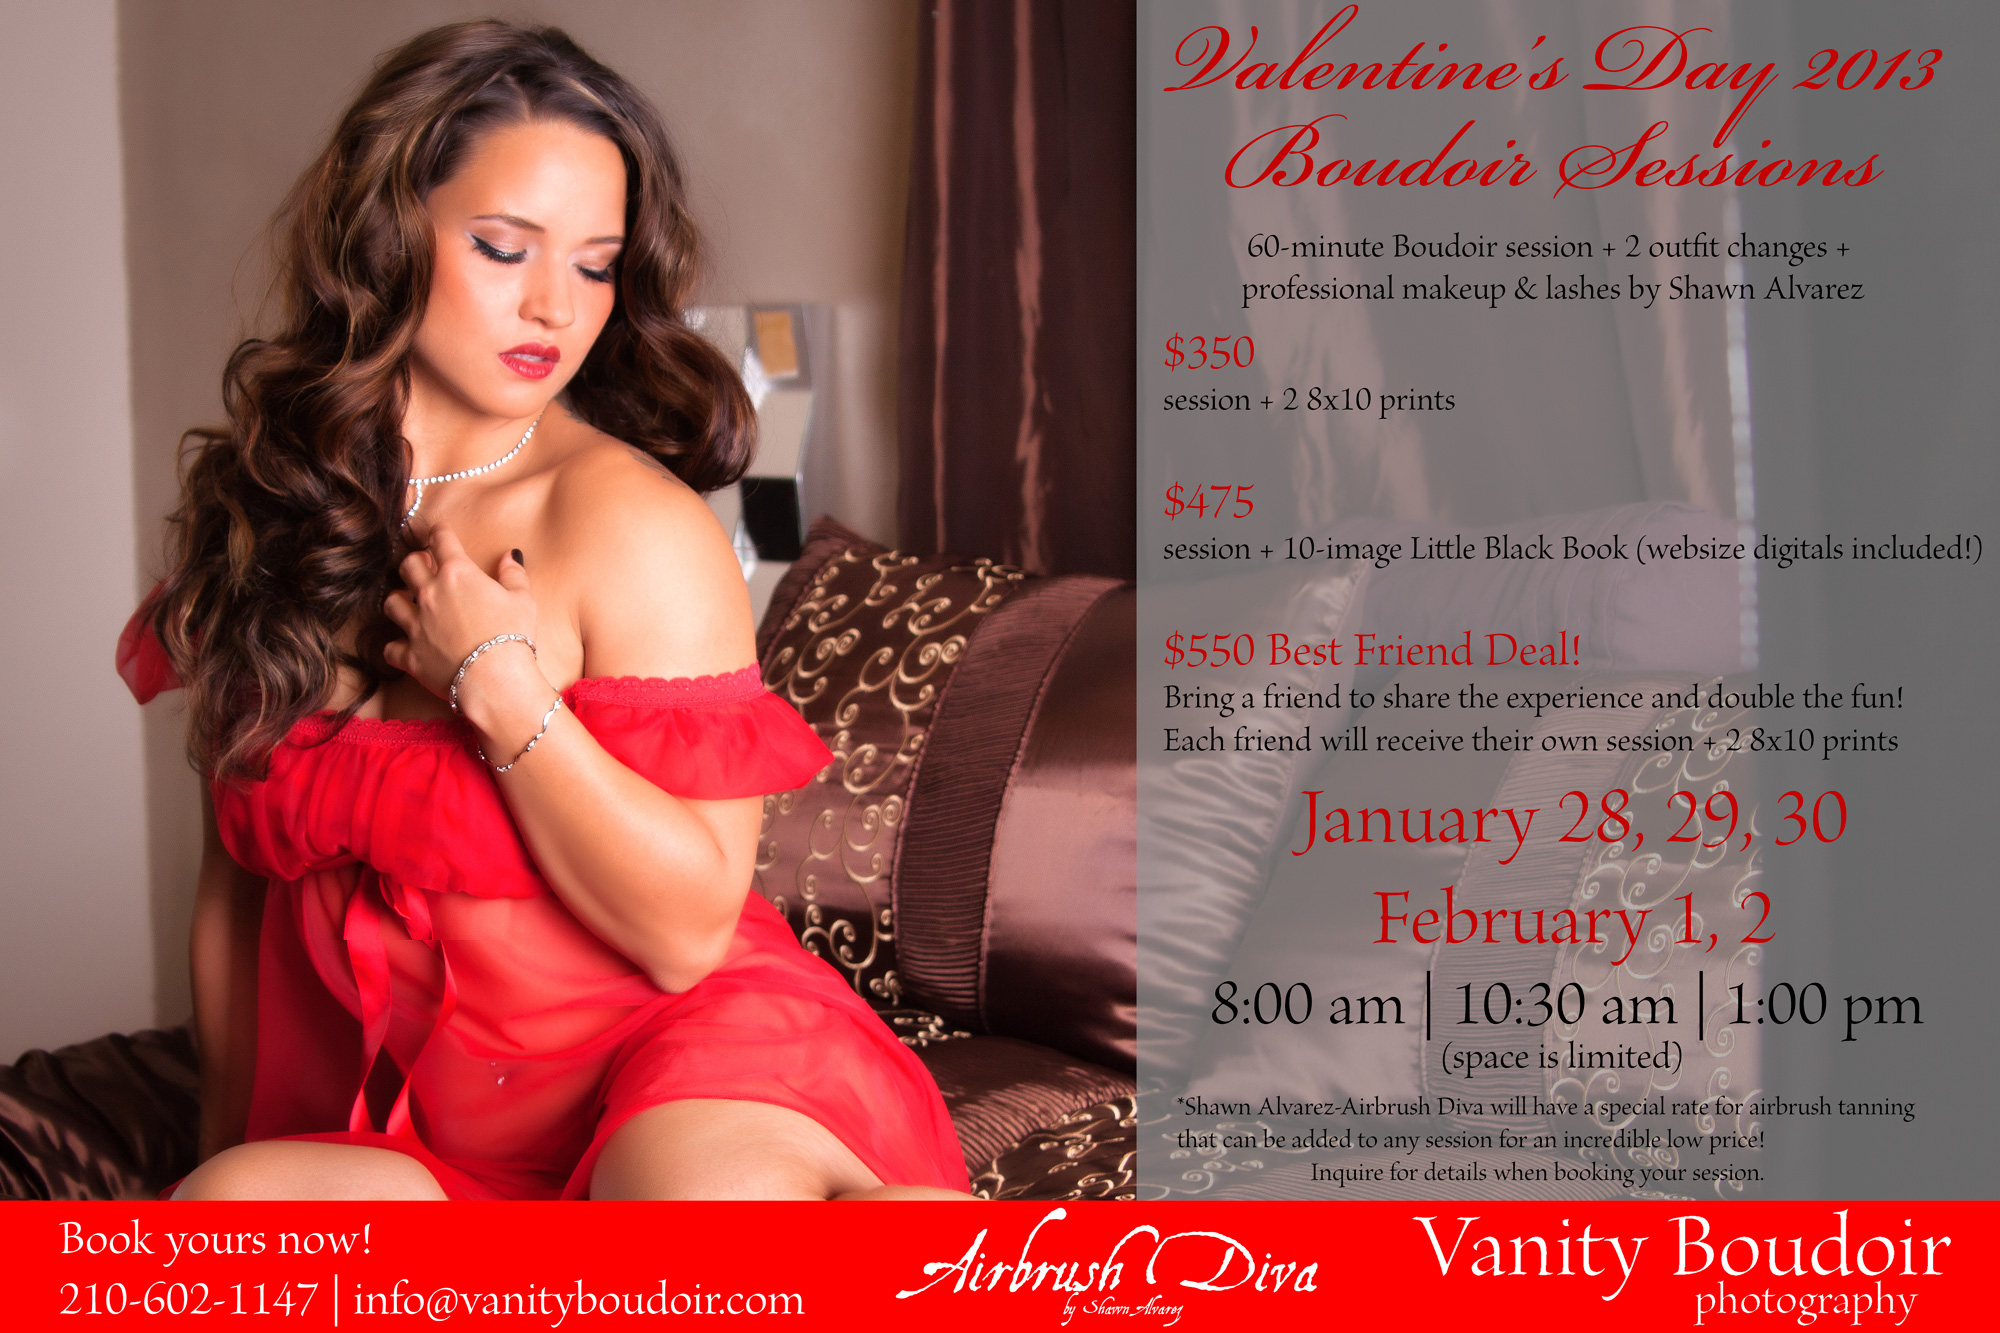 Valentines Day 2013 Boudoir Sessions San Antonio Boudoir Photographer Vanity Boudoir 4558